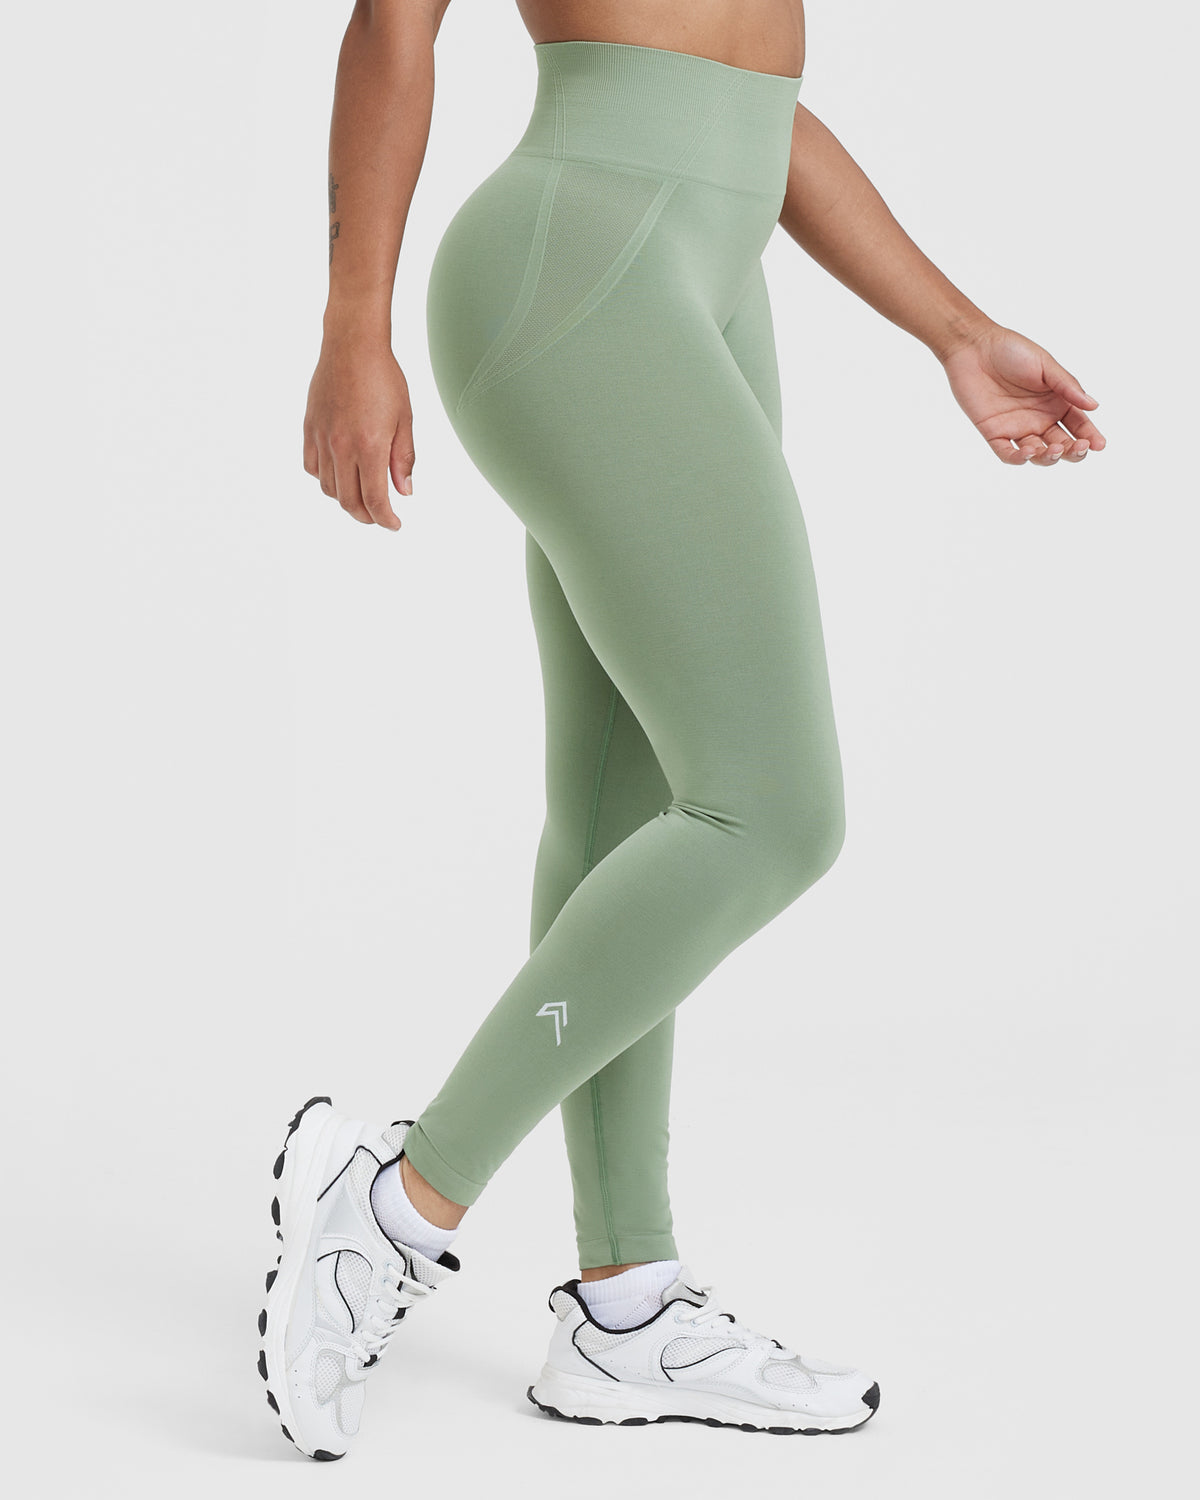 These leggings r such a cute color 💚 Color: Sage Size: S #gym